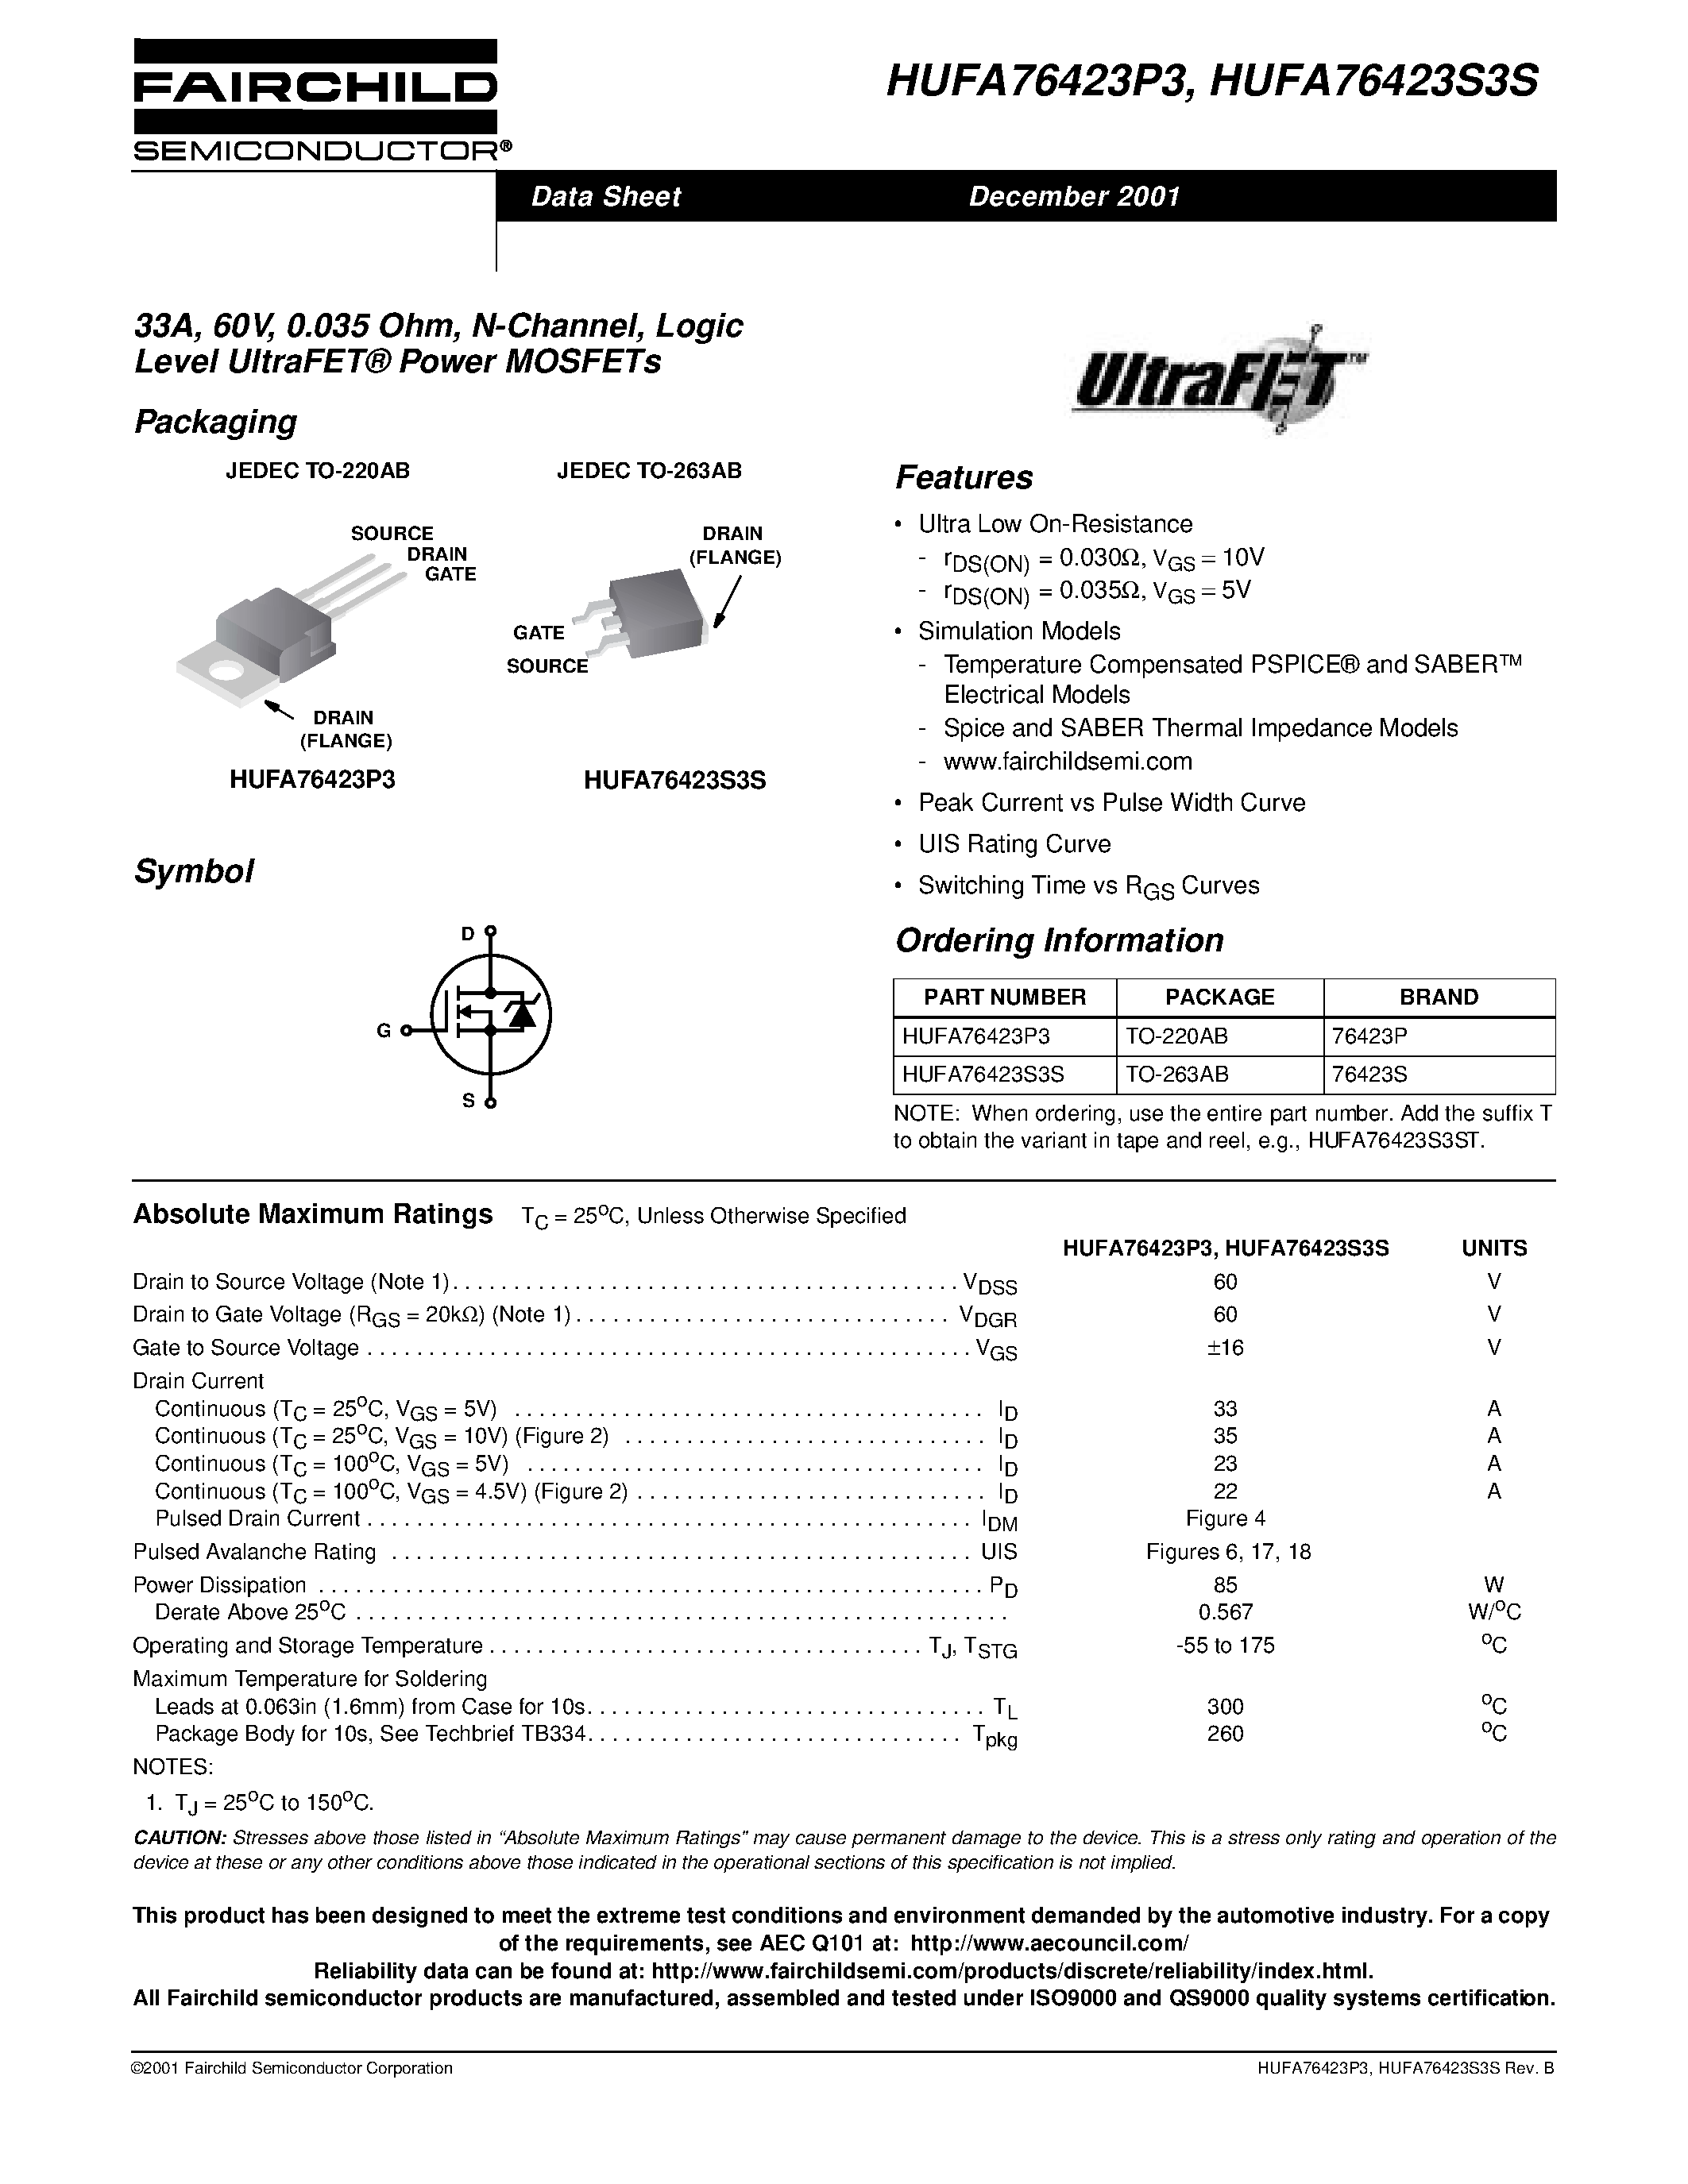 Даташит HUFA76423S3S - 33A/ 60V/ 0.035 Ohm/ N-Channel/ Logic Level UltraFET Power MOSFETs страница 1